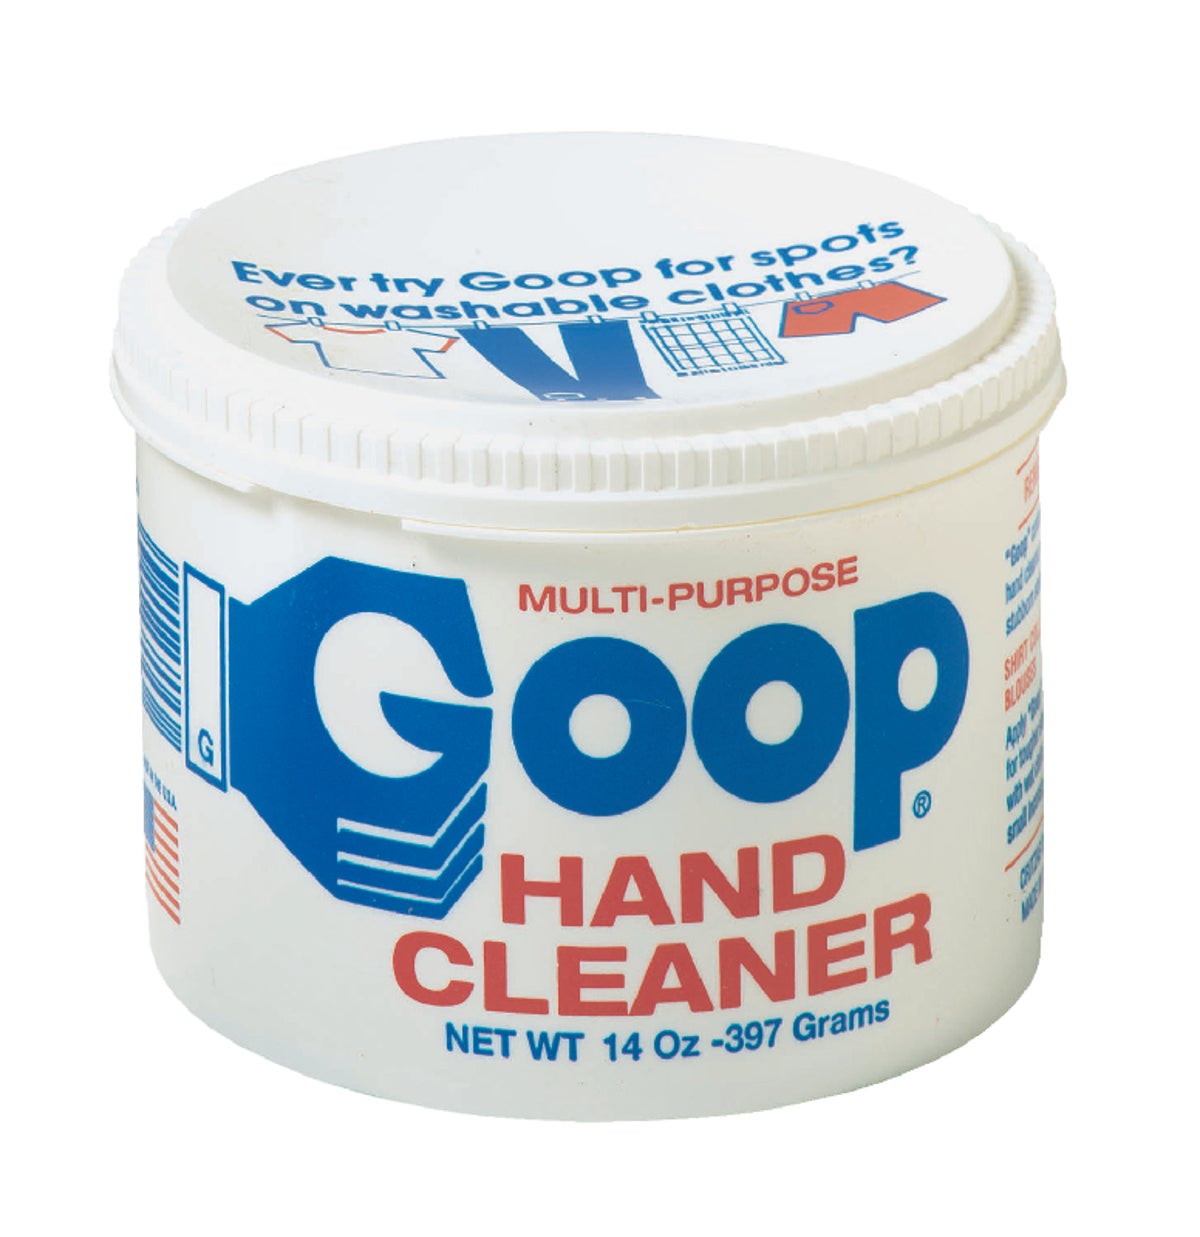 Buy GOJO Original Formula Hand Cleaner 14 Oz.